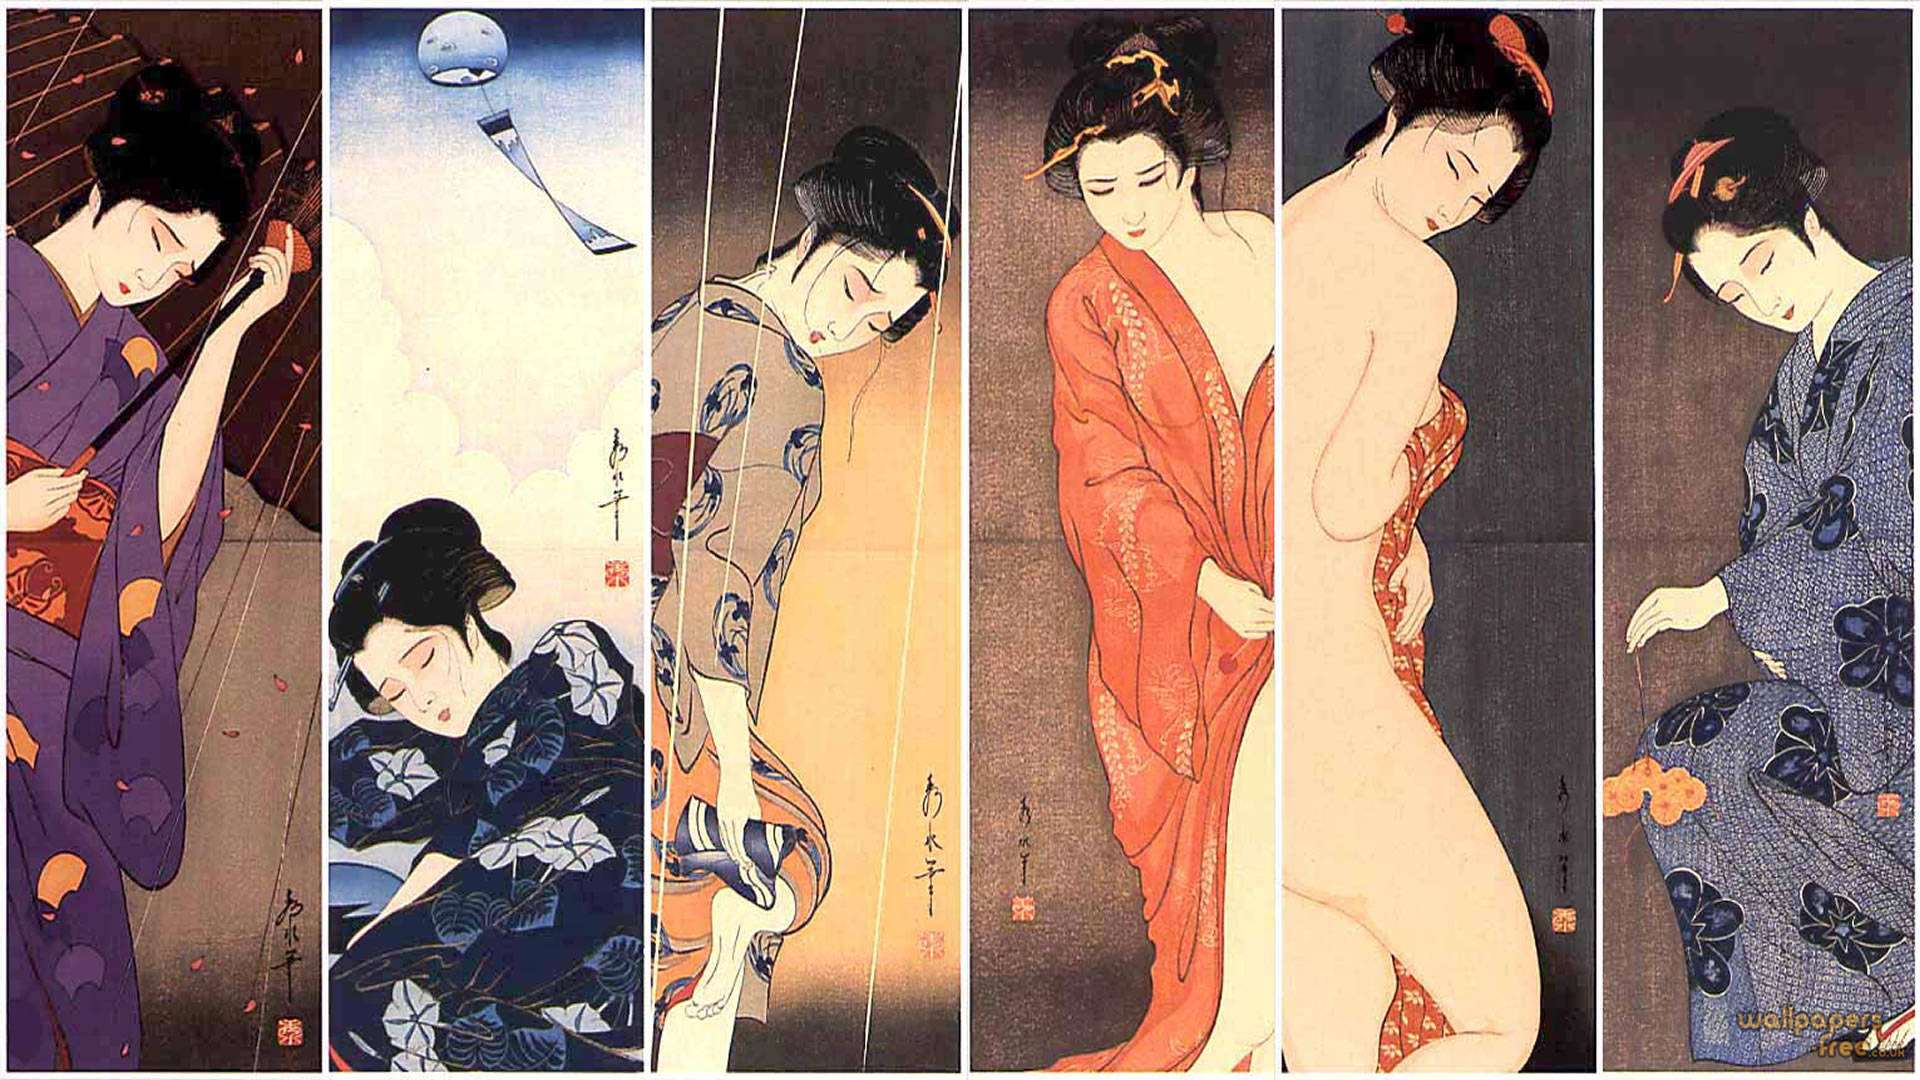 Geisha Posing Side-by-side Wallpaper